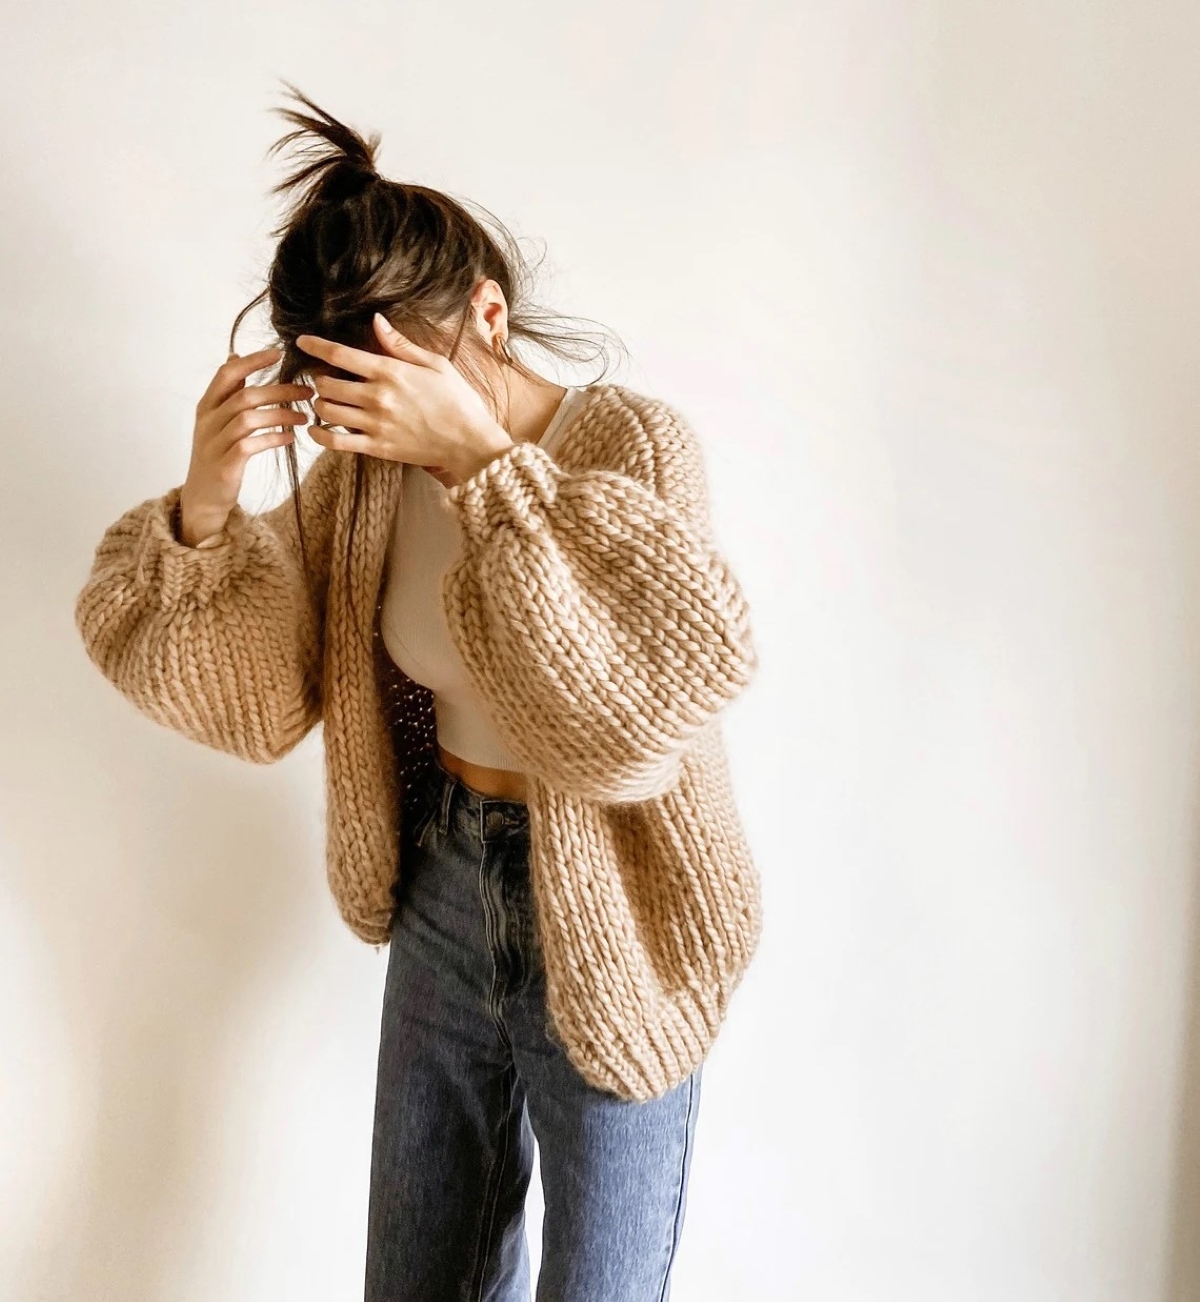 knitting patterns for beginners - woman wearing tan oversized cardigan